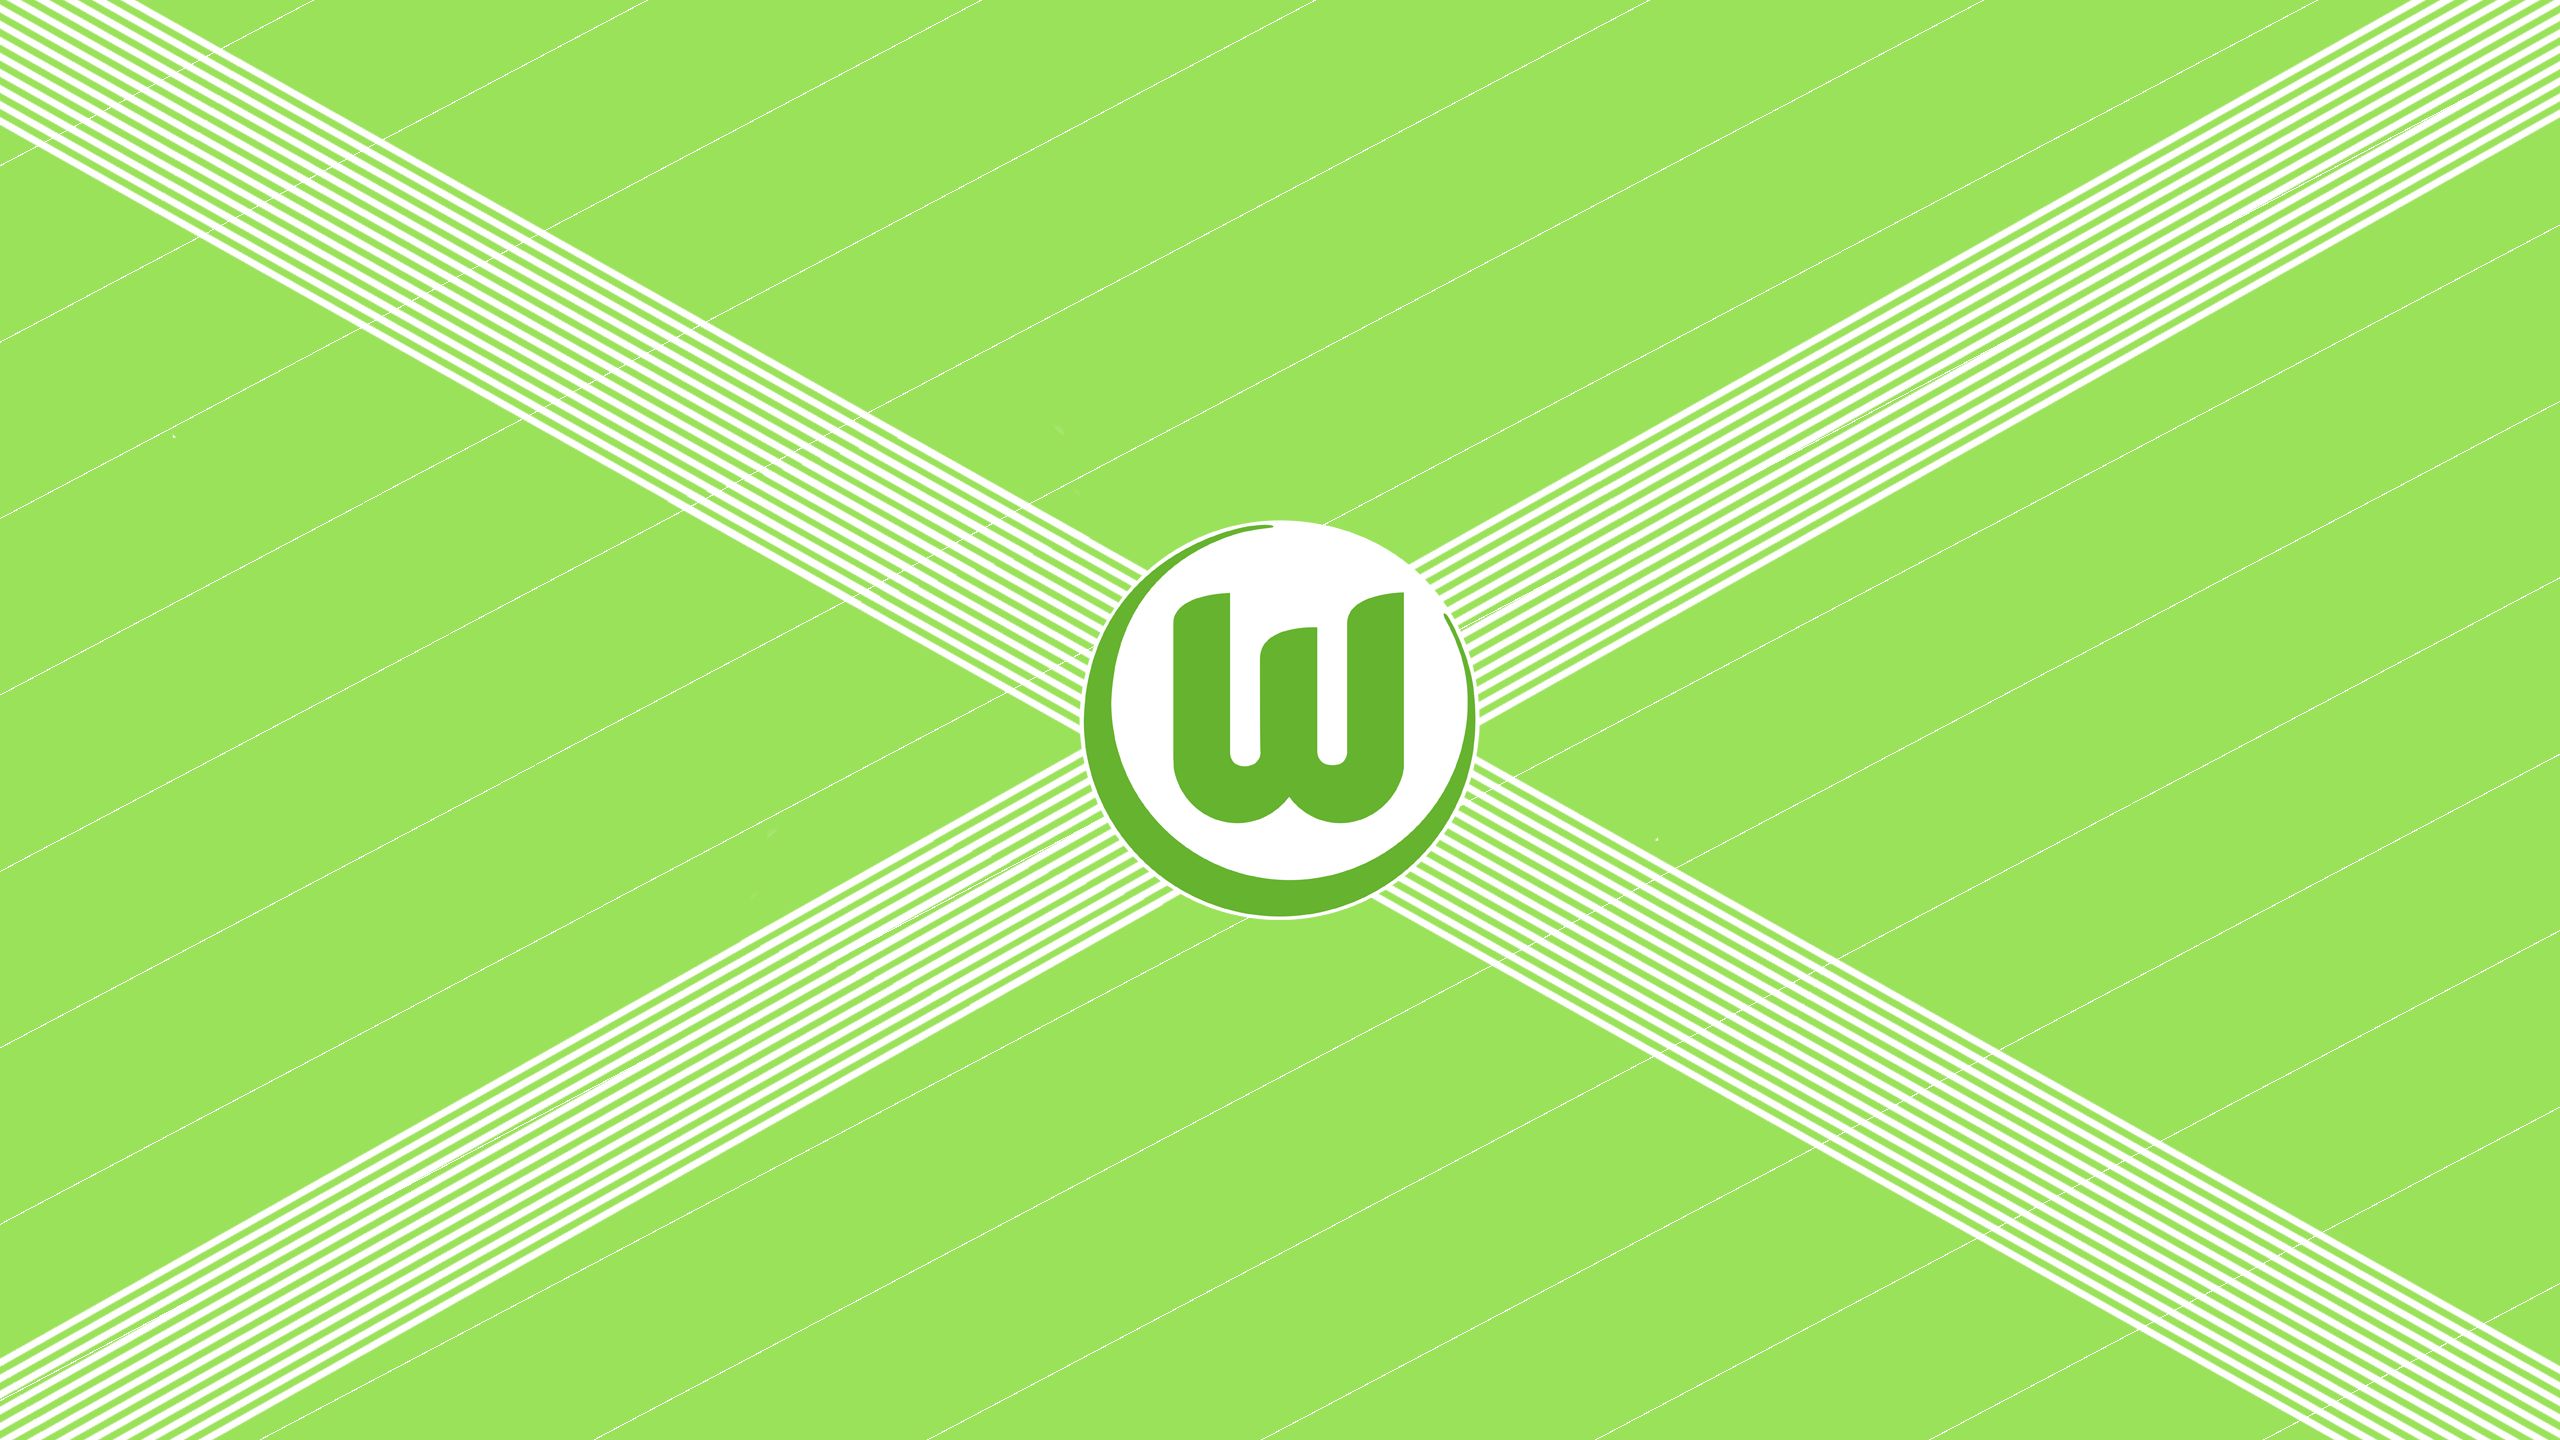 Popular Vfl Wolfsburg Image for Phone